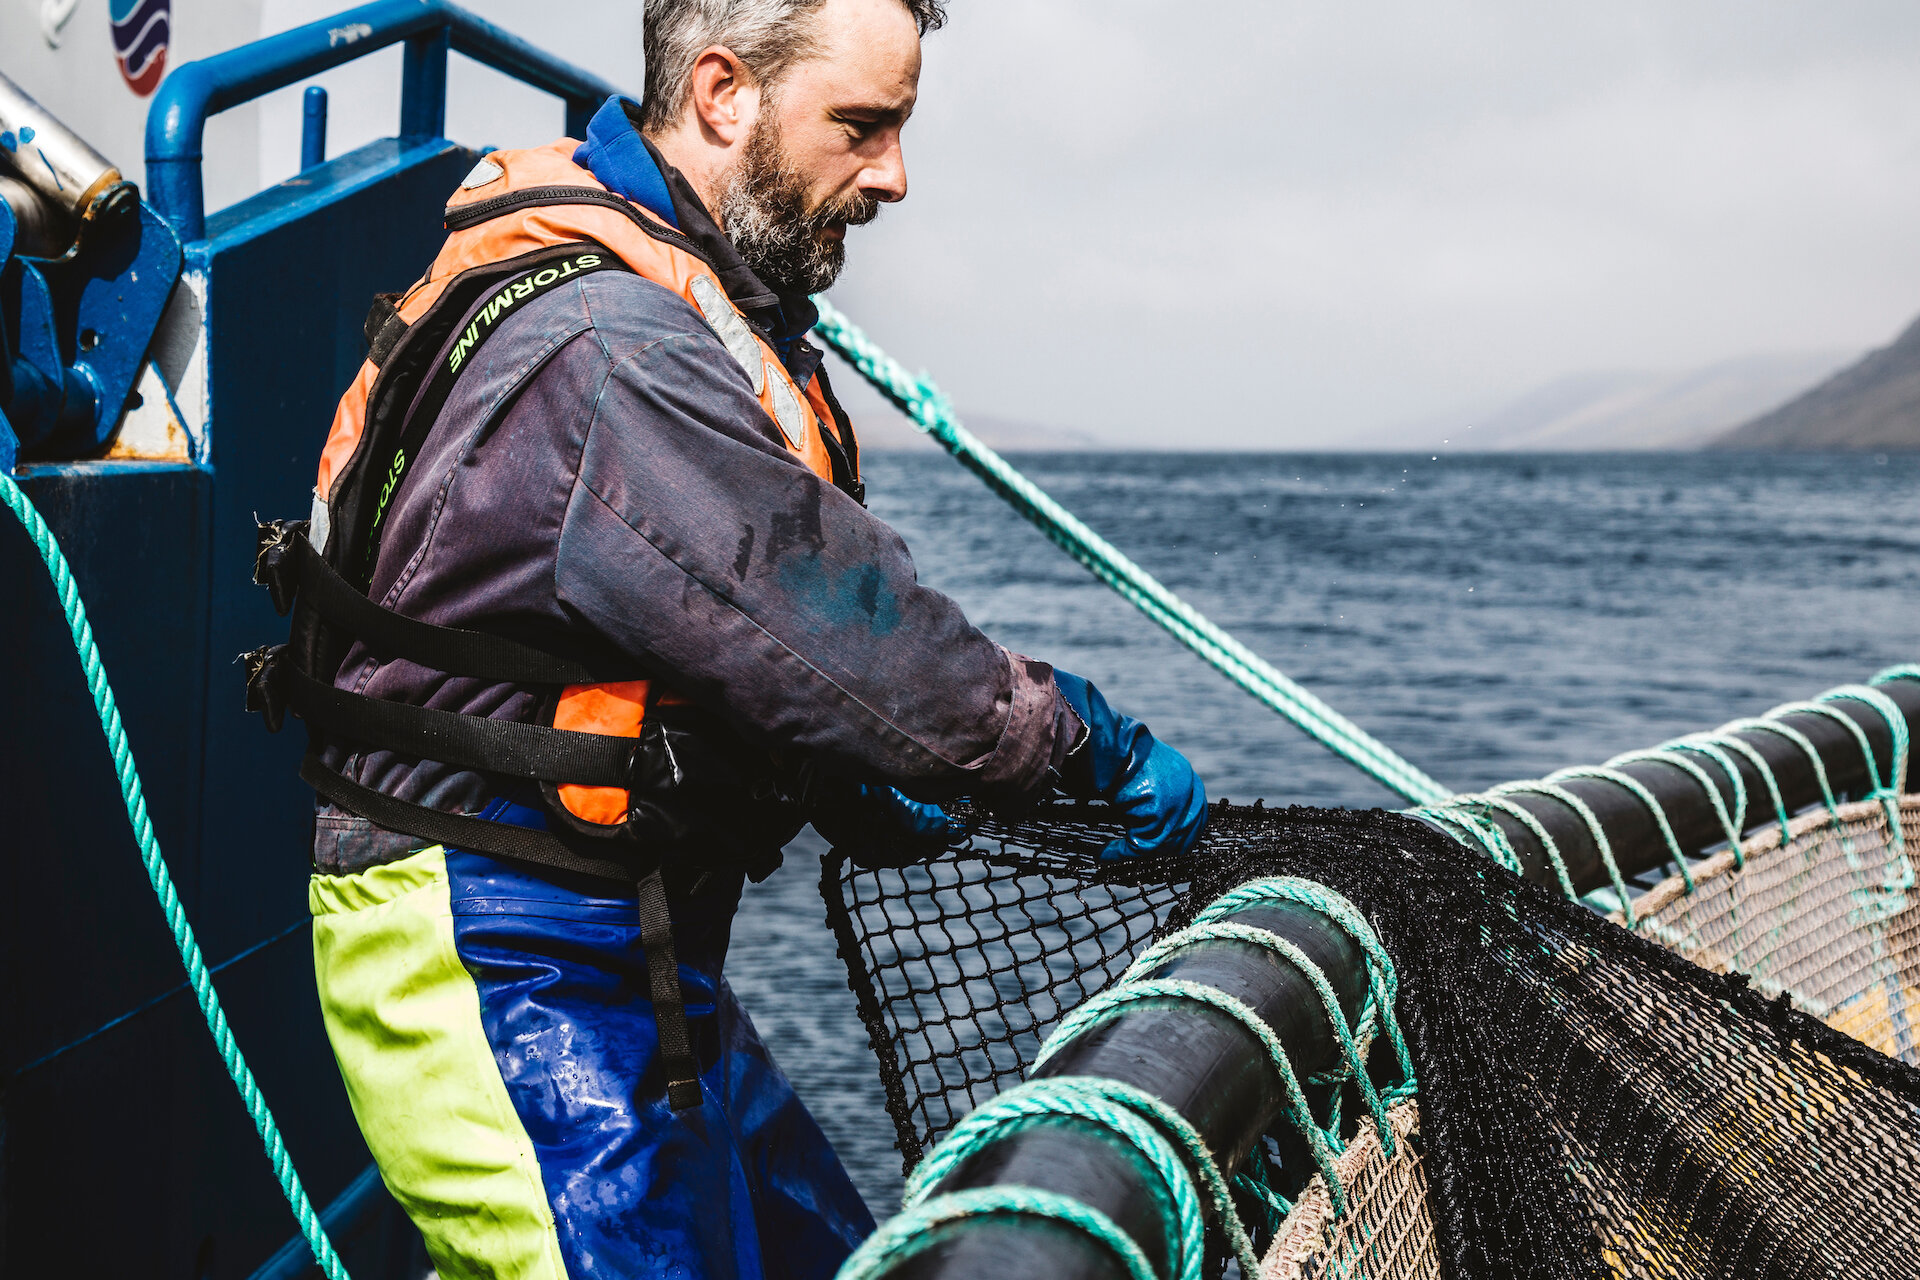 Shetland farms produce more than 36,000 tonnes of salmon